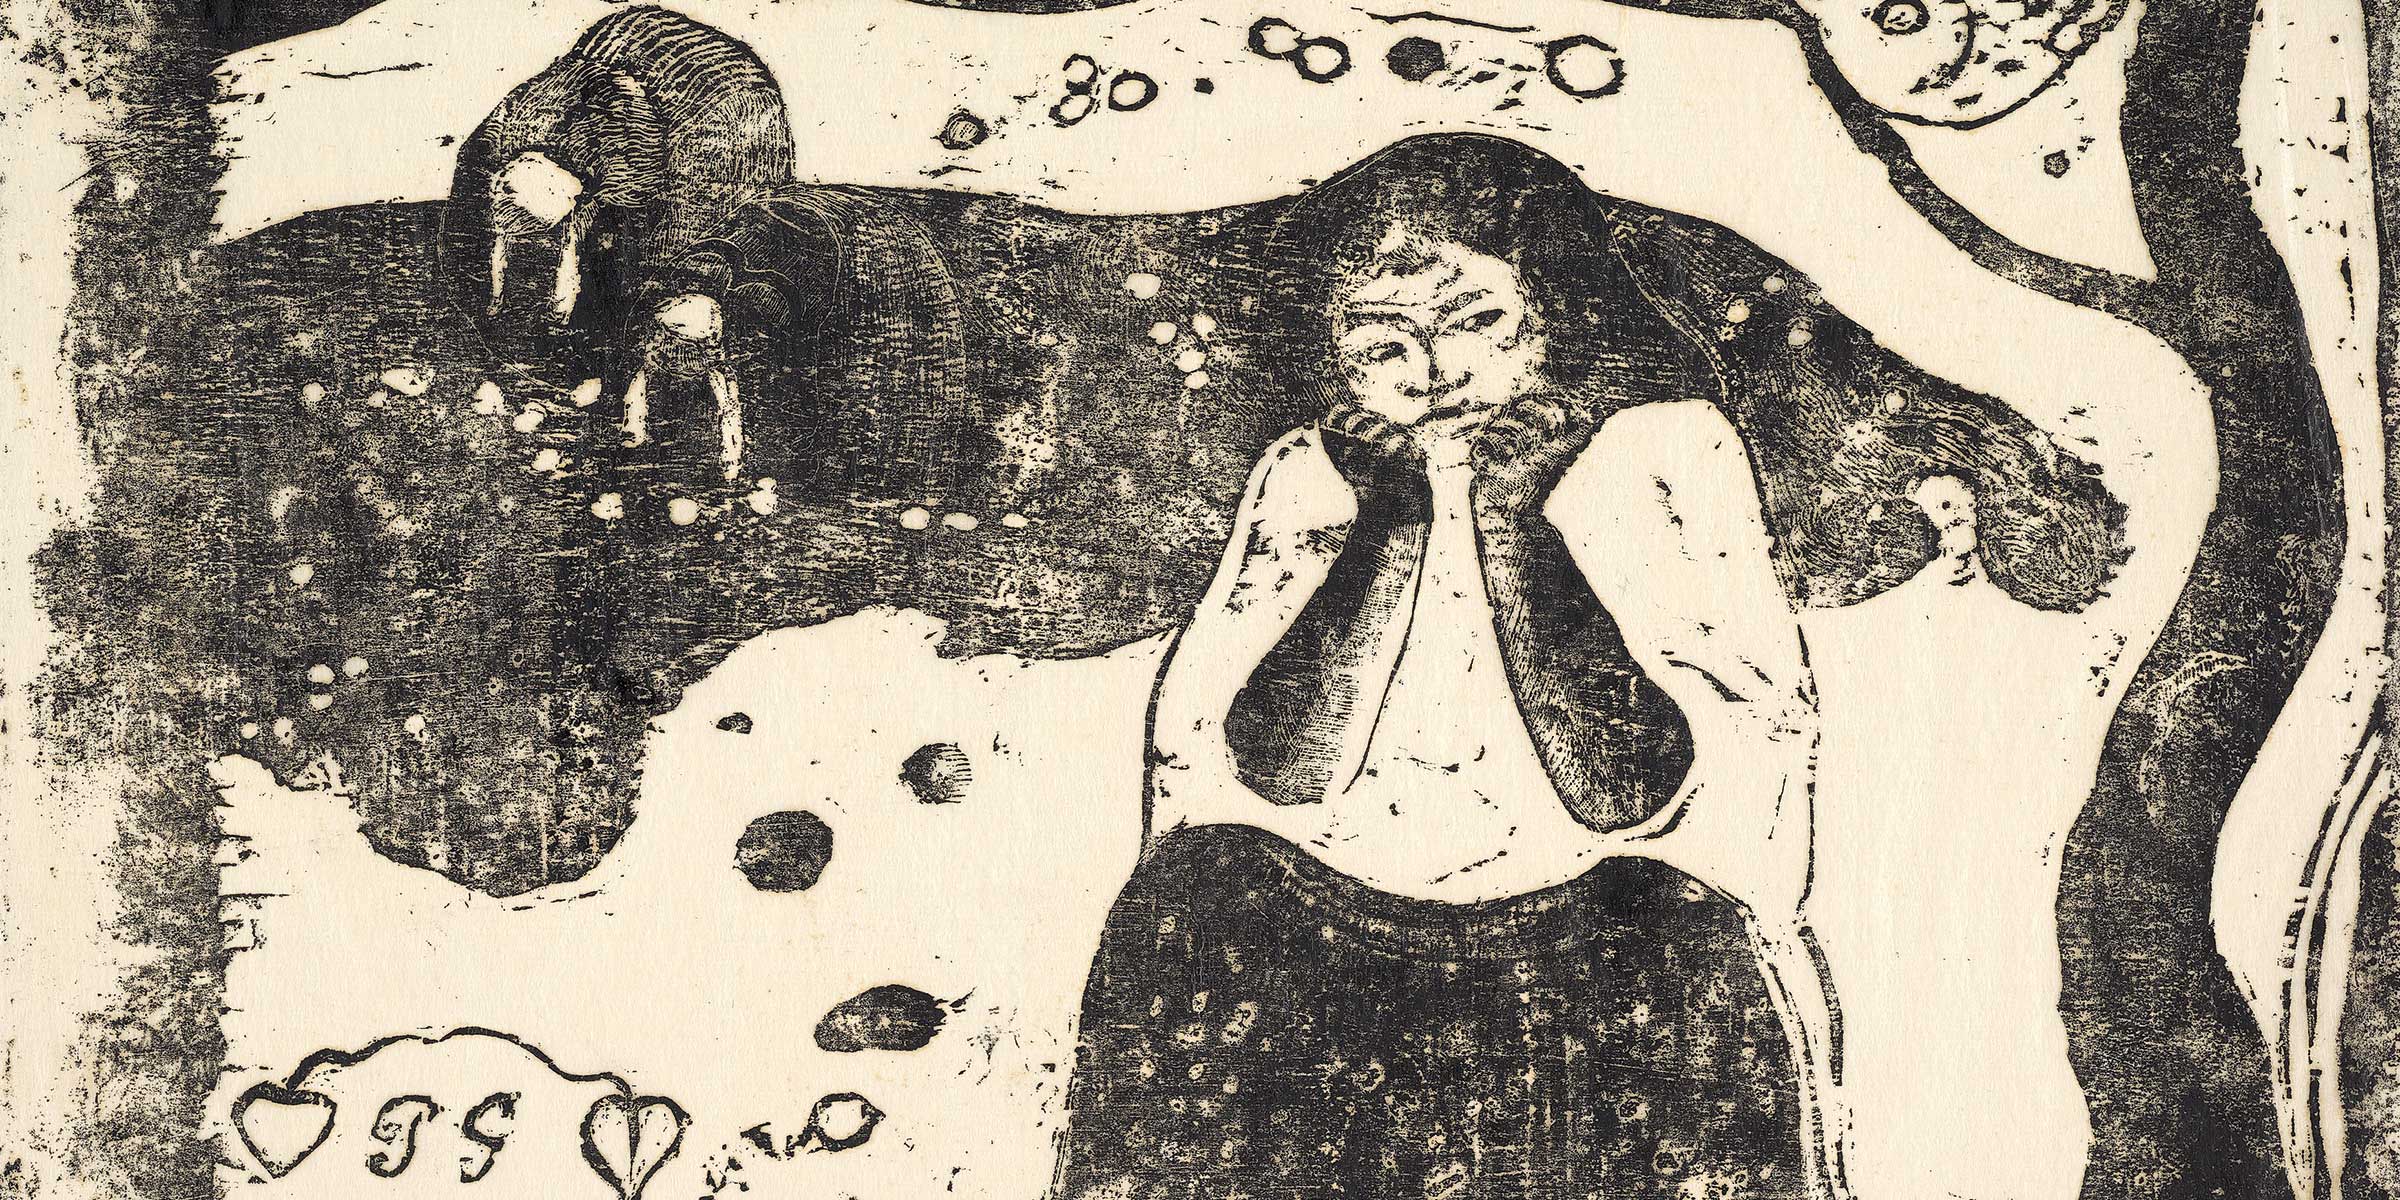 Human Misery (detail), by Paul Gauguin, 1898–99.